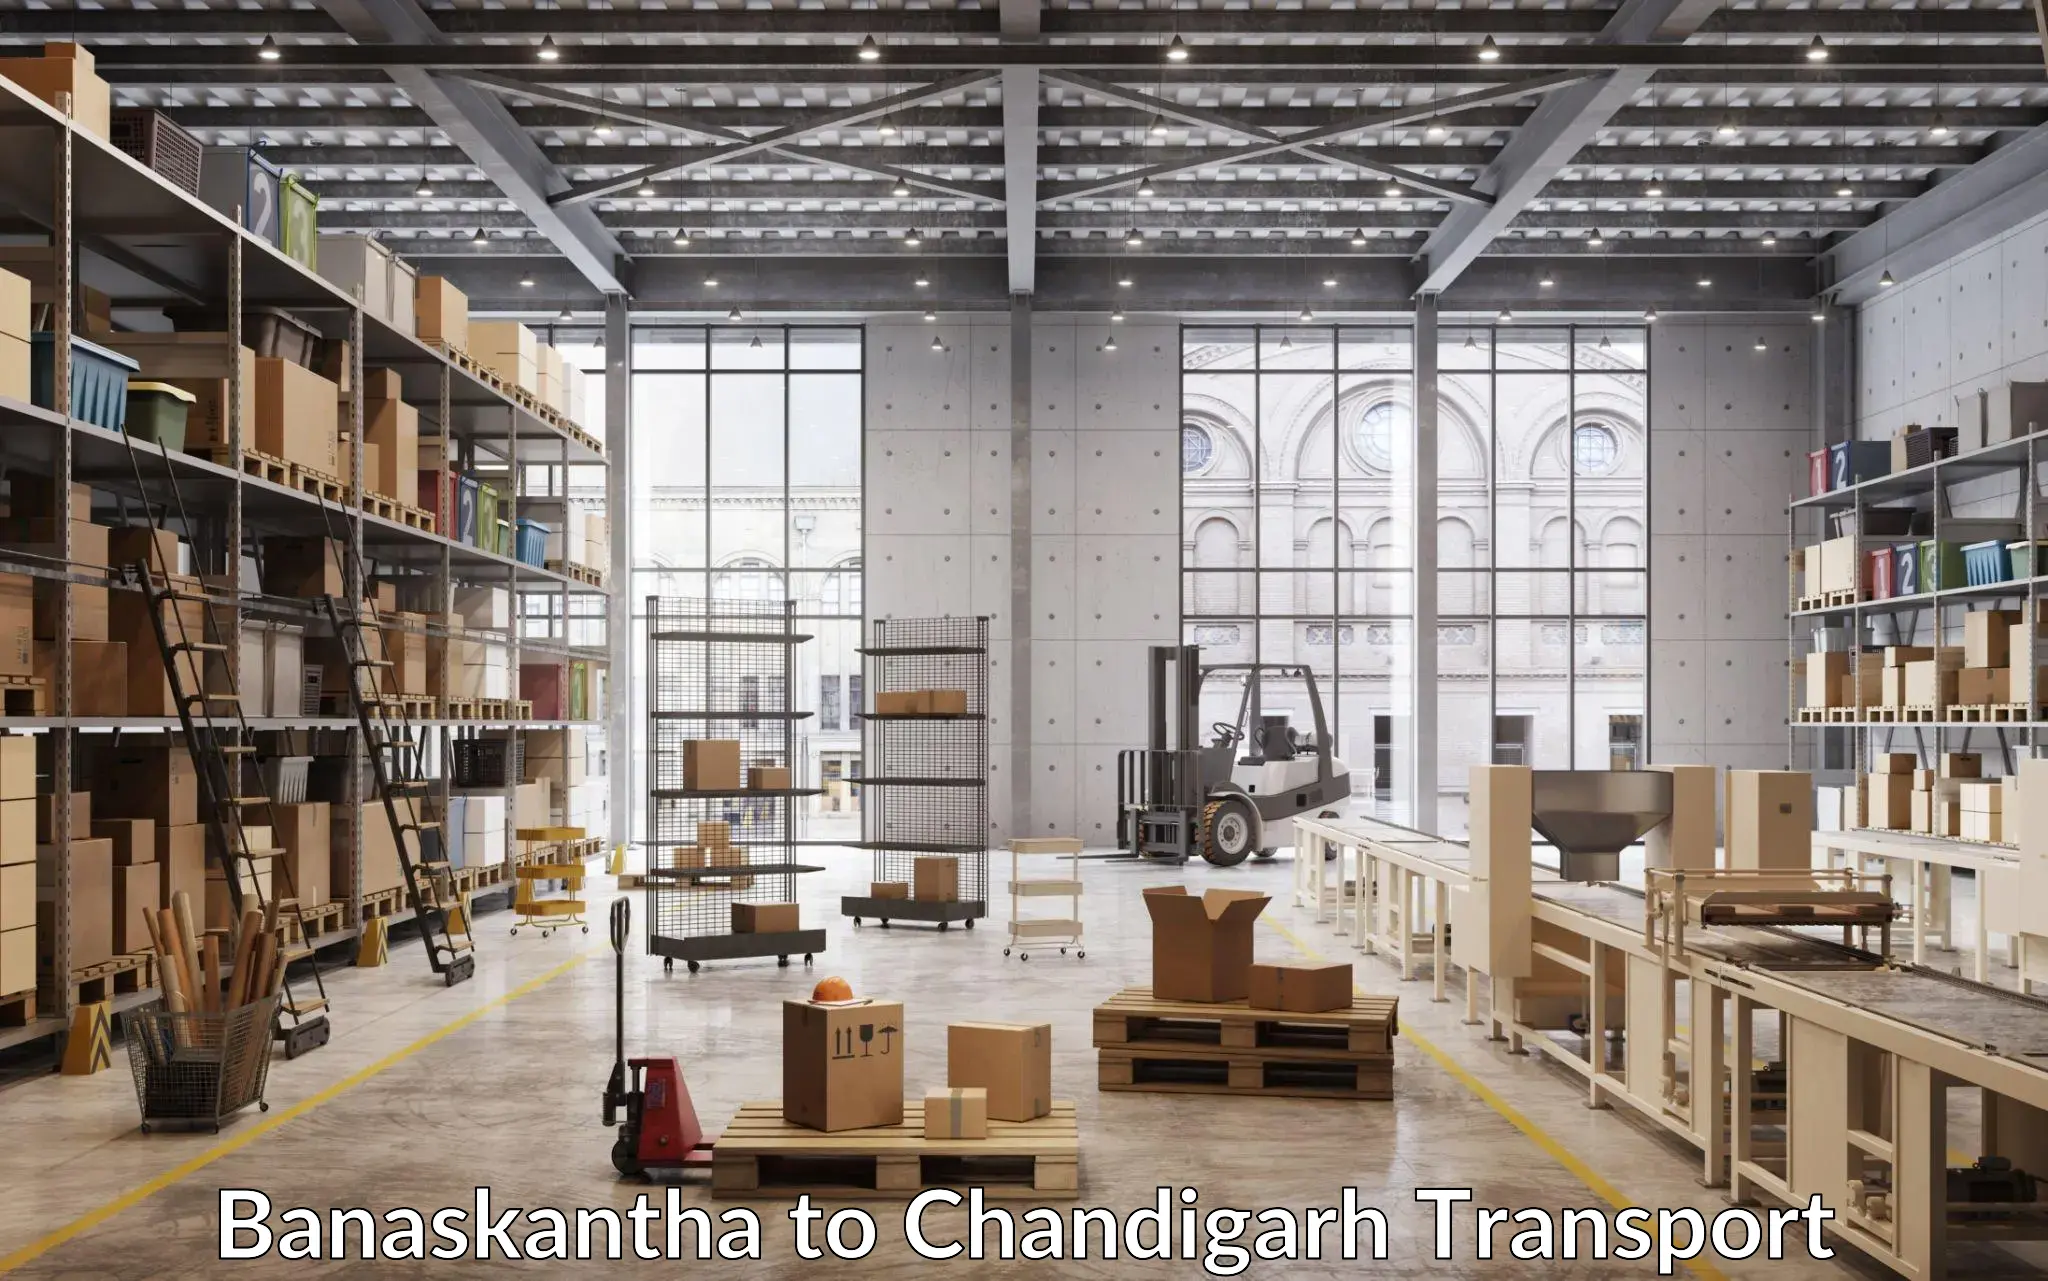 Delivery service Banaskantha to Chandigarh